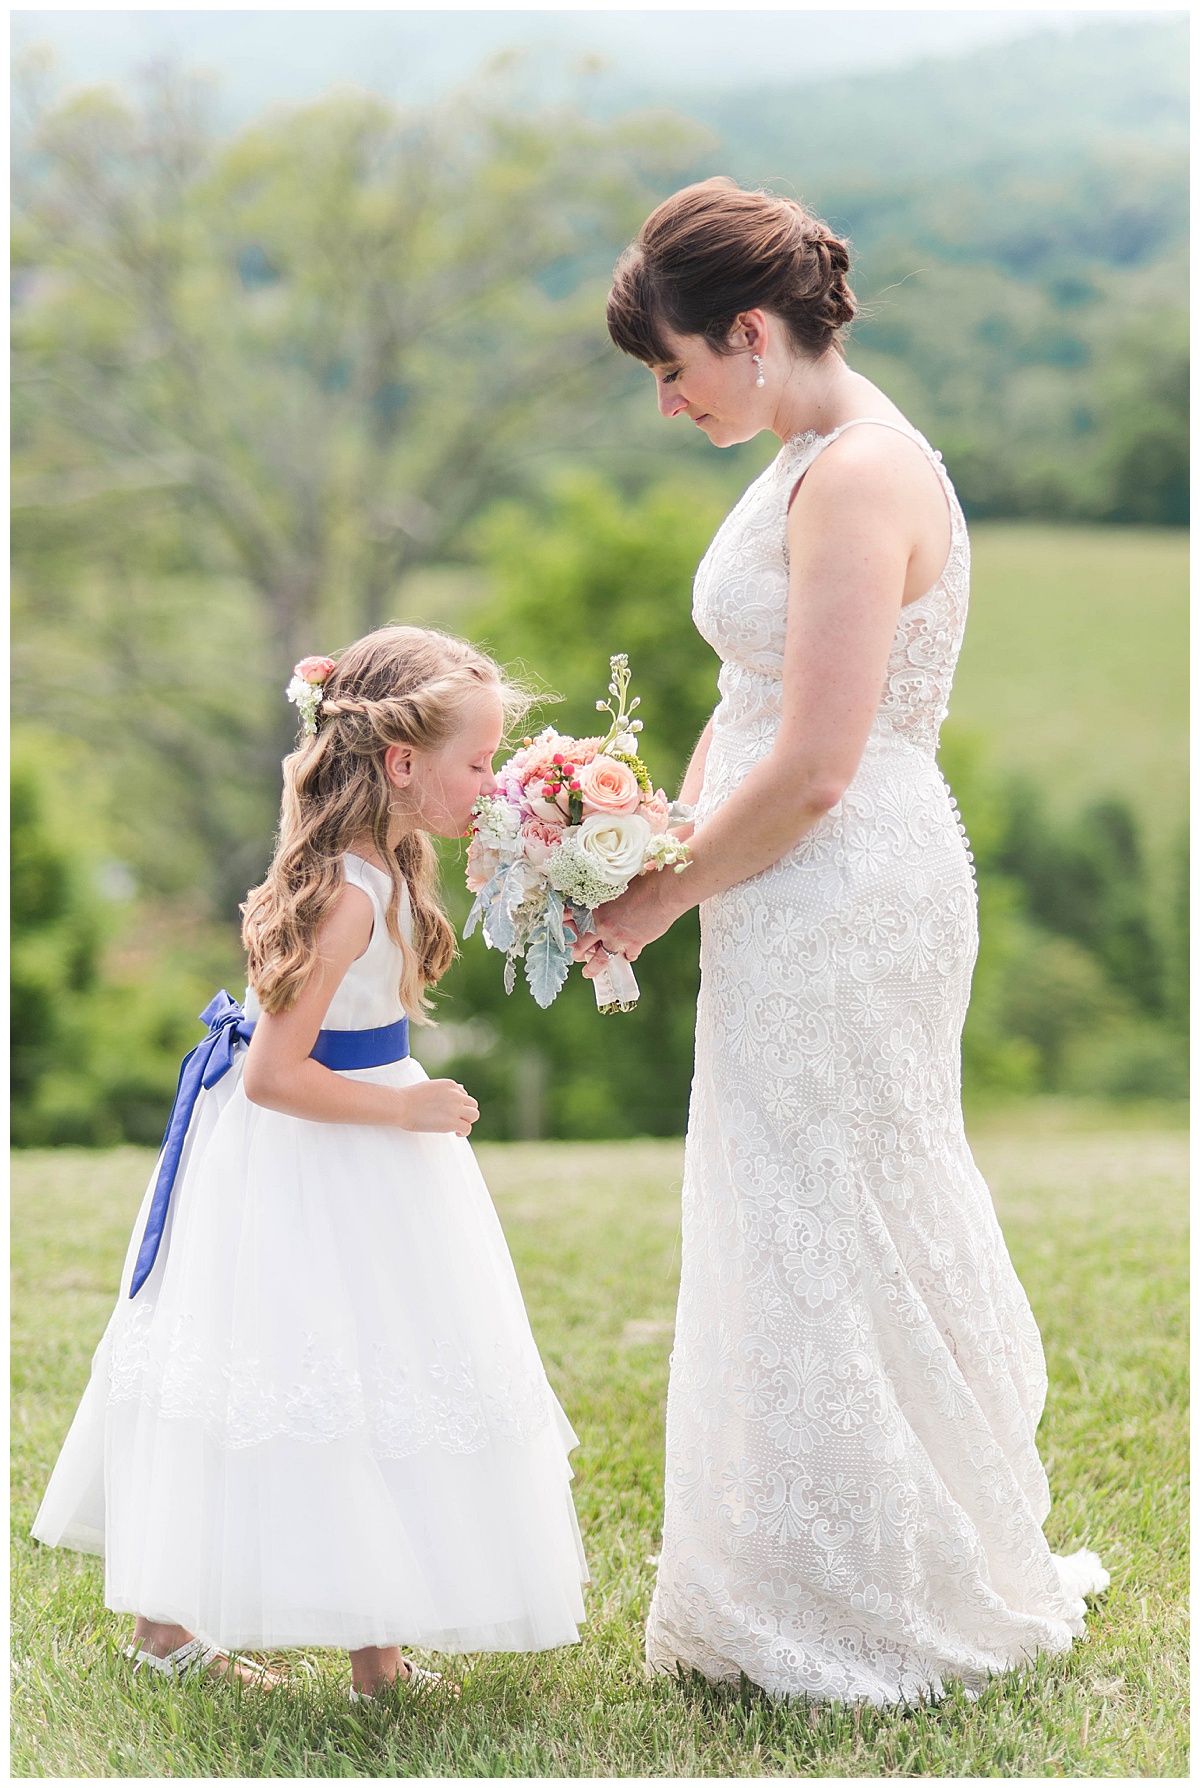 Rustic Charlottesville Farm Wedding: Bridal Portrait with Flower Girl